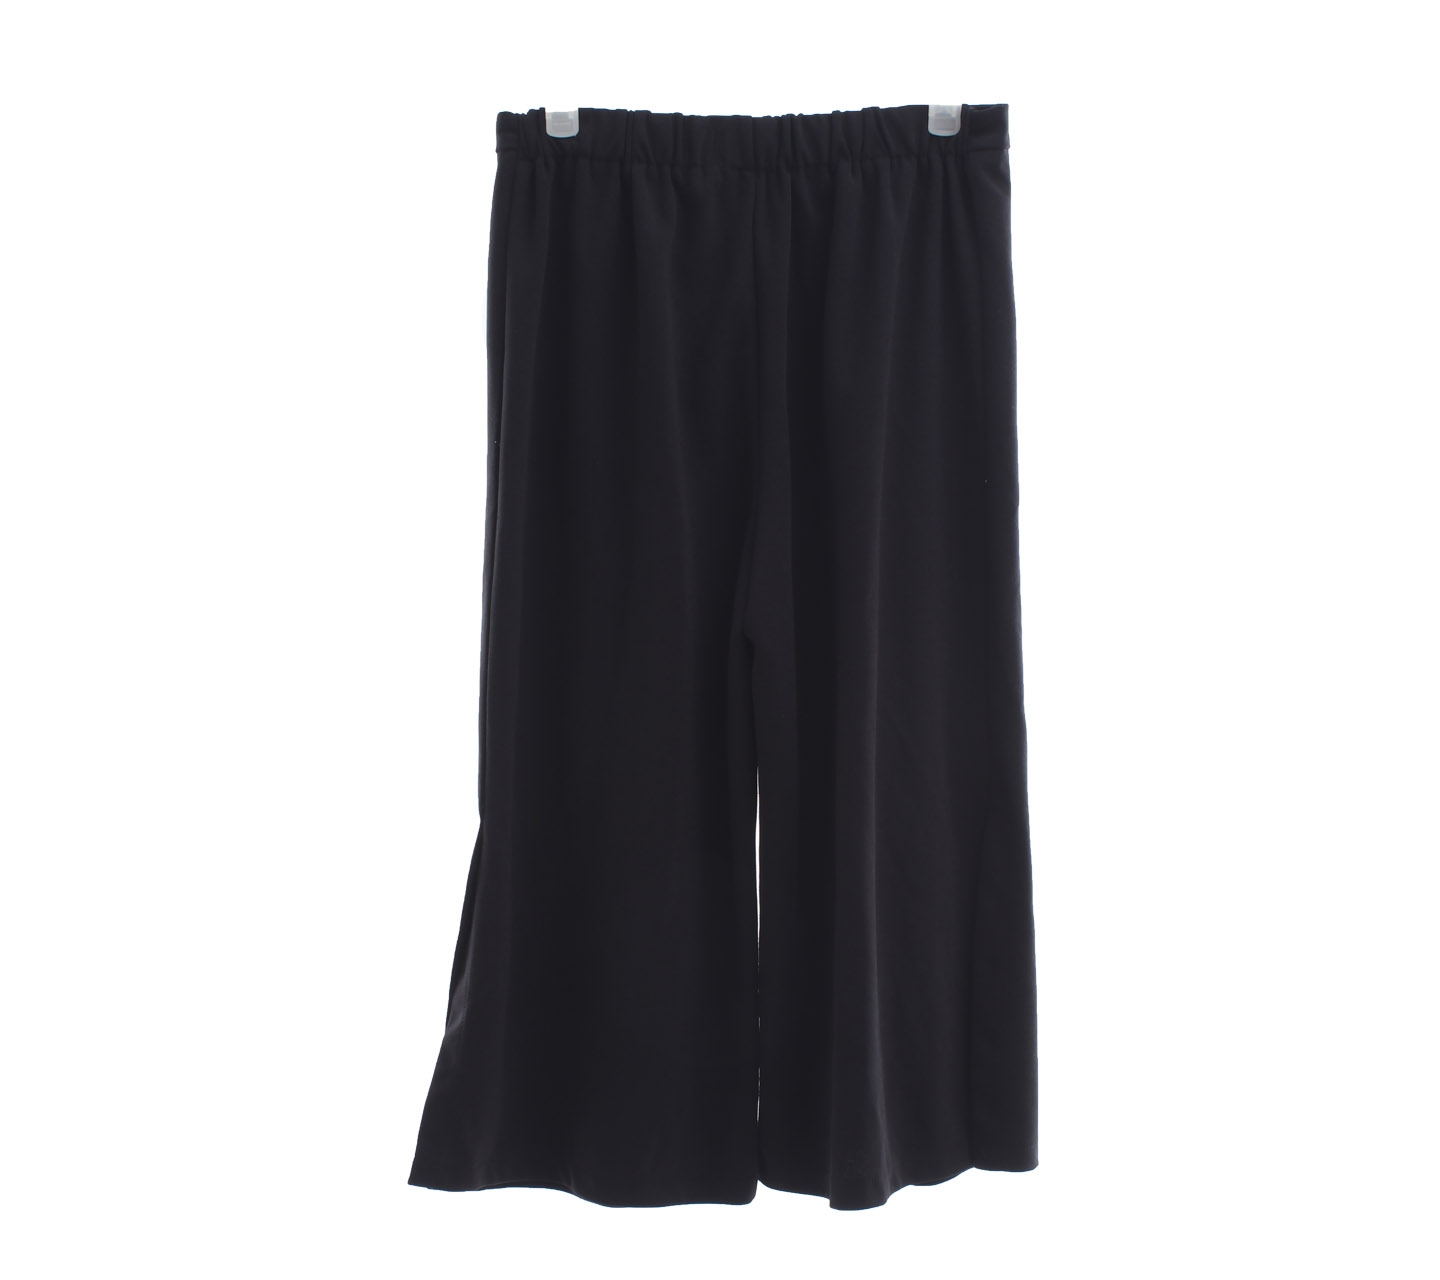 Eloise Black Culottes Cropped Pants